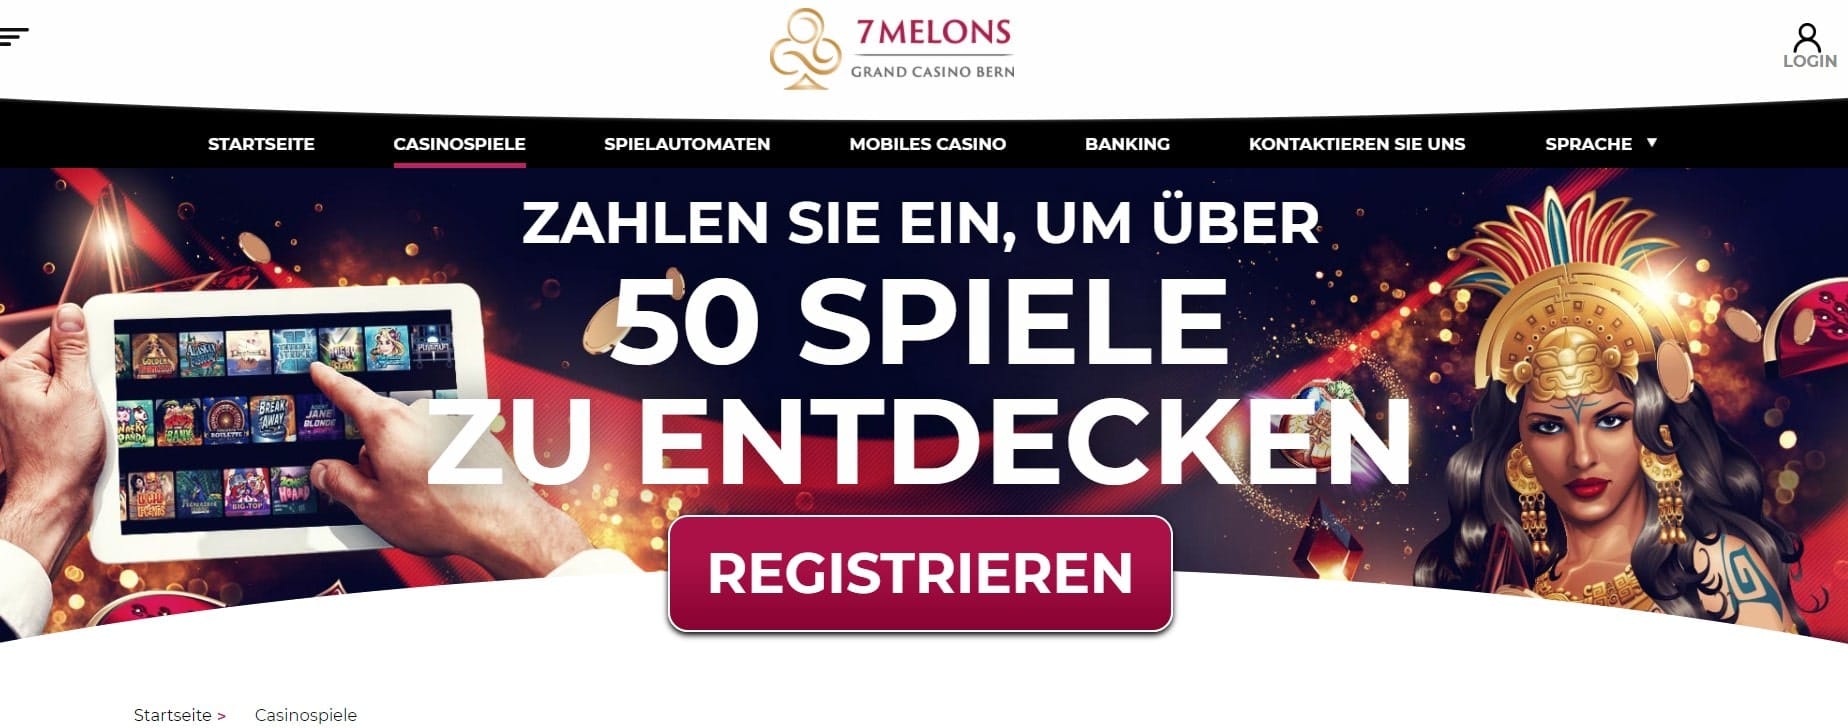 7 Melons Casino Online